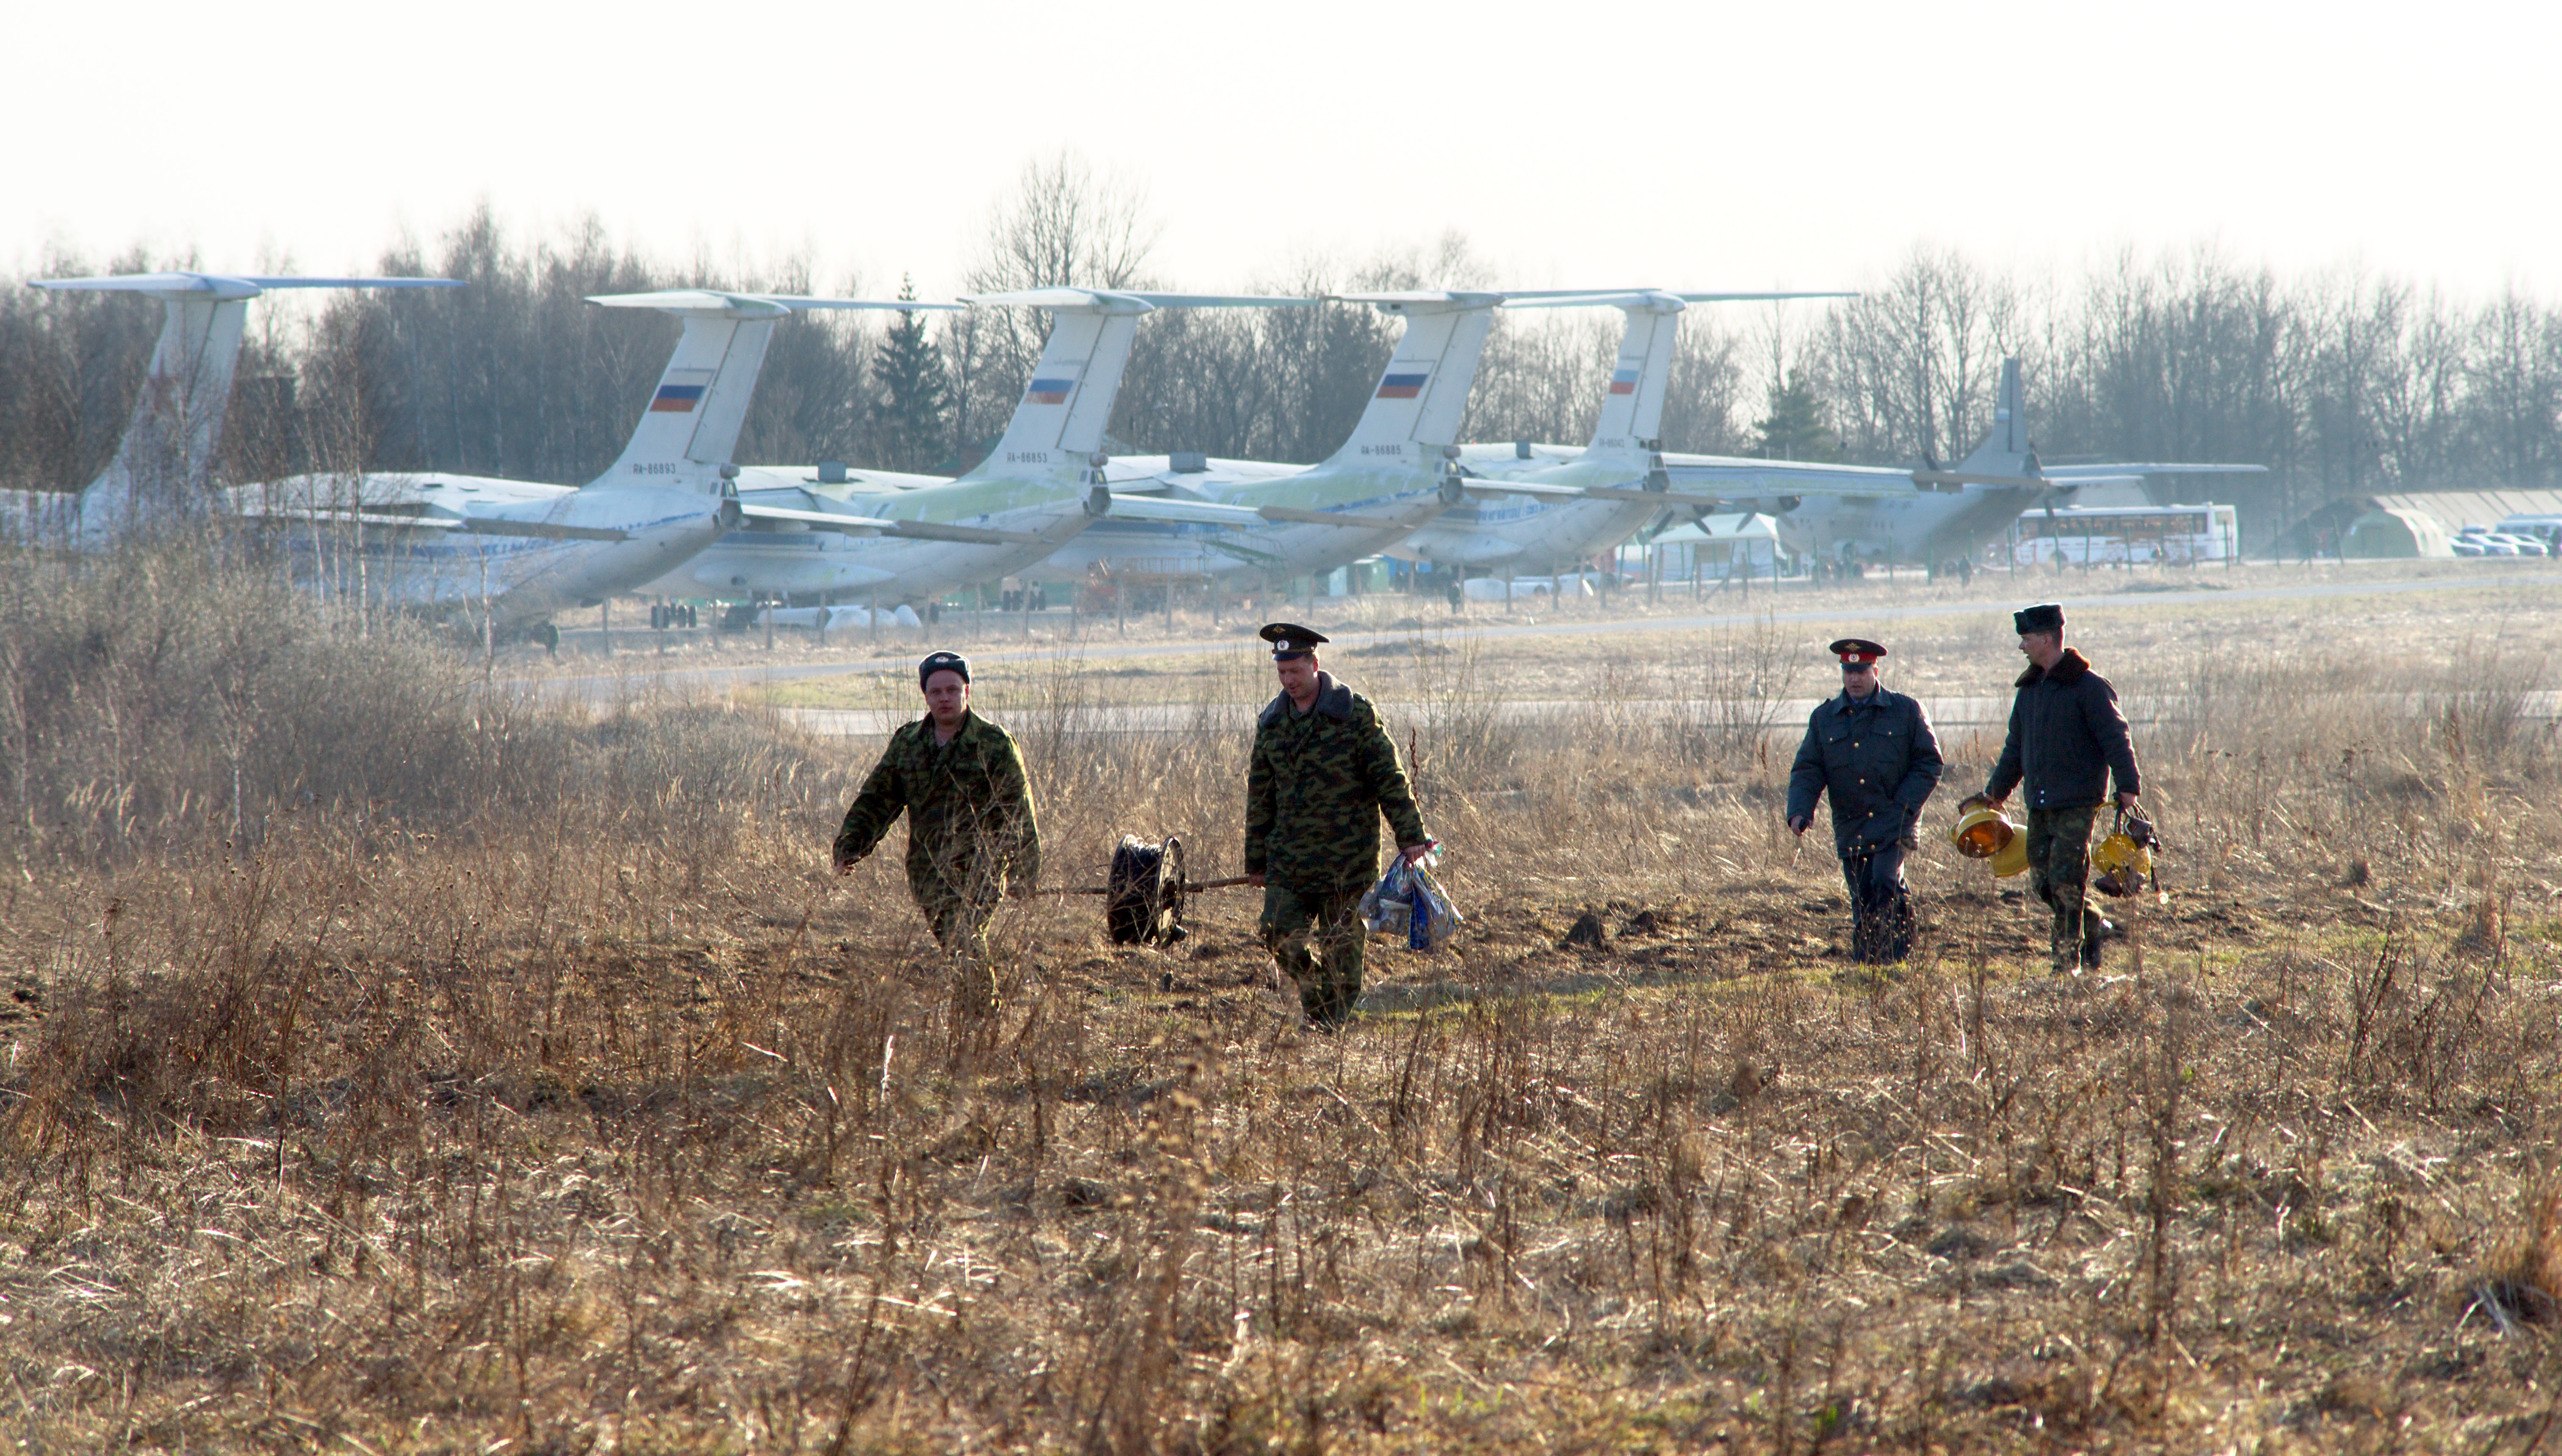 Court issues arrest warrant against air controller over Smolensk crash